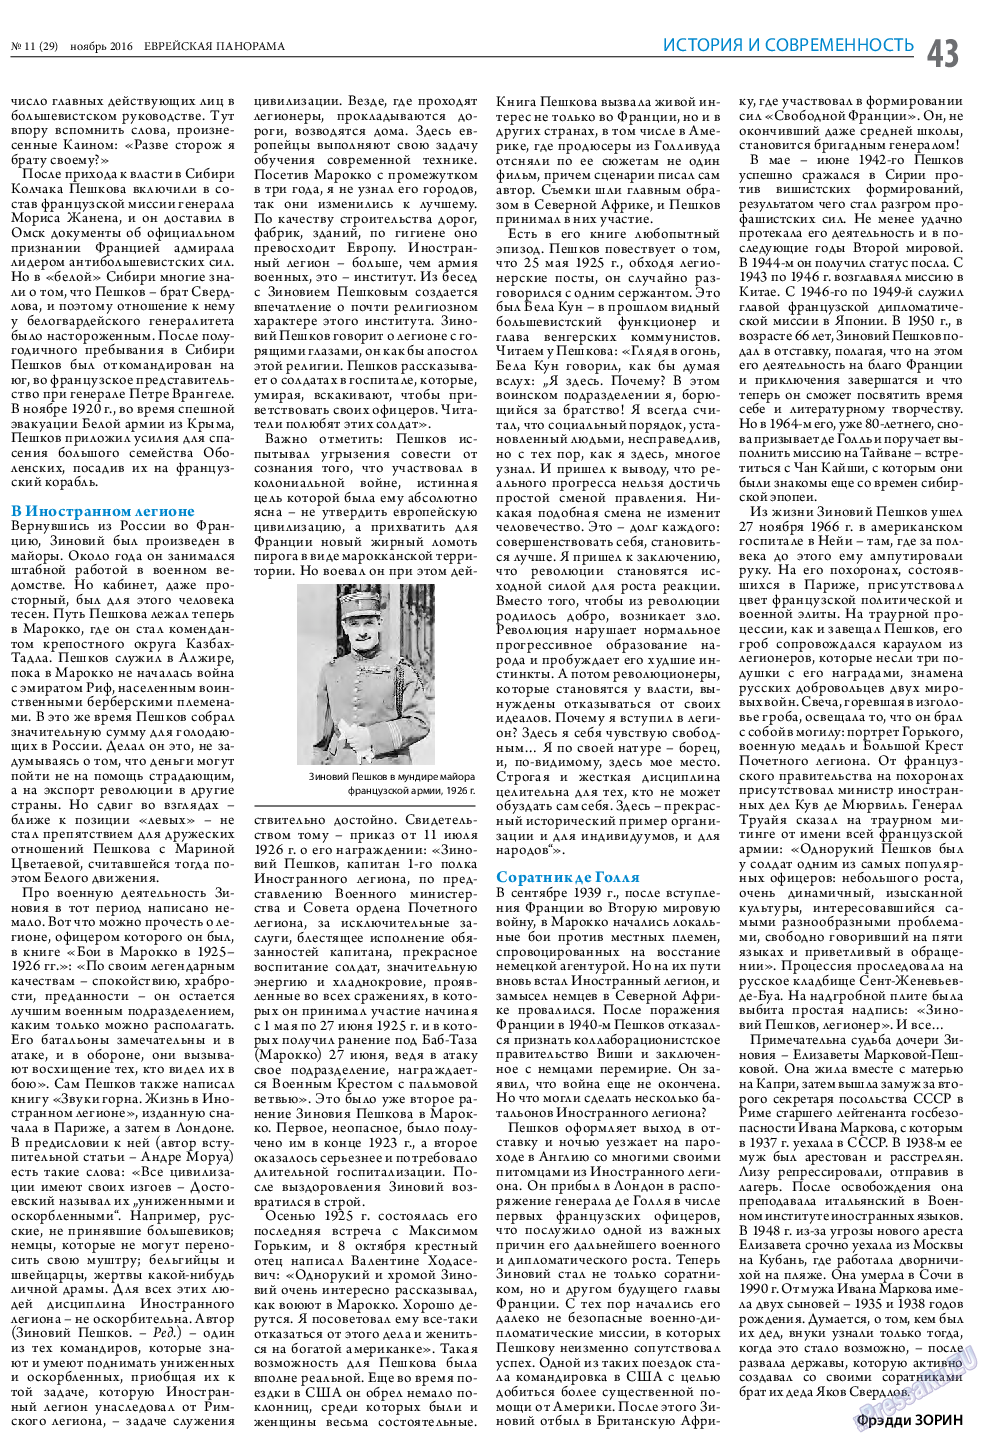 Еврейская панорама, газета. 2016 №11 стр.43